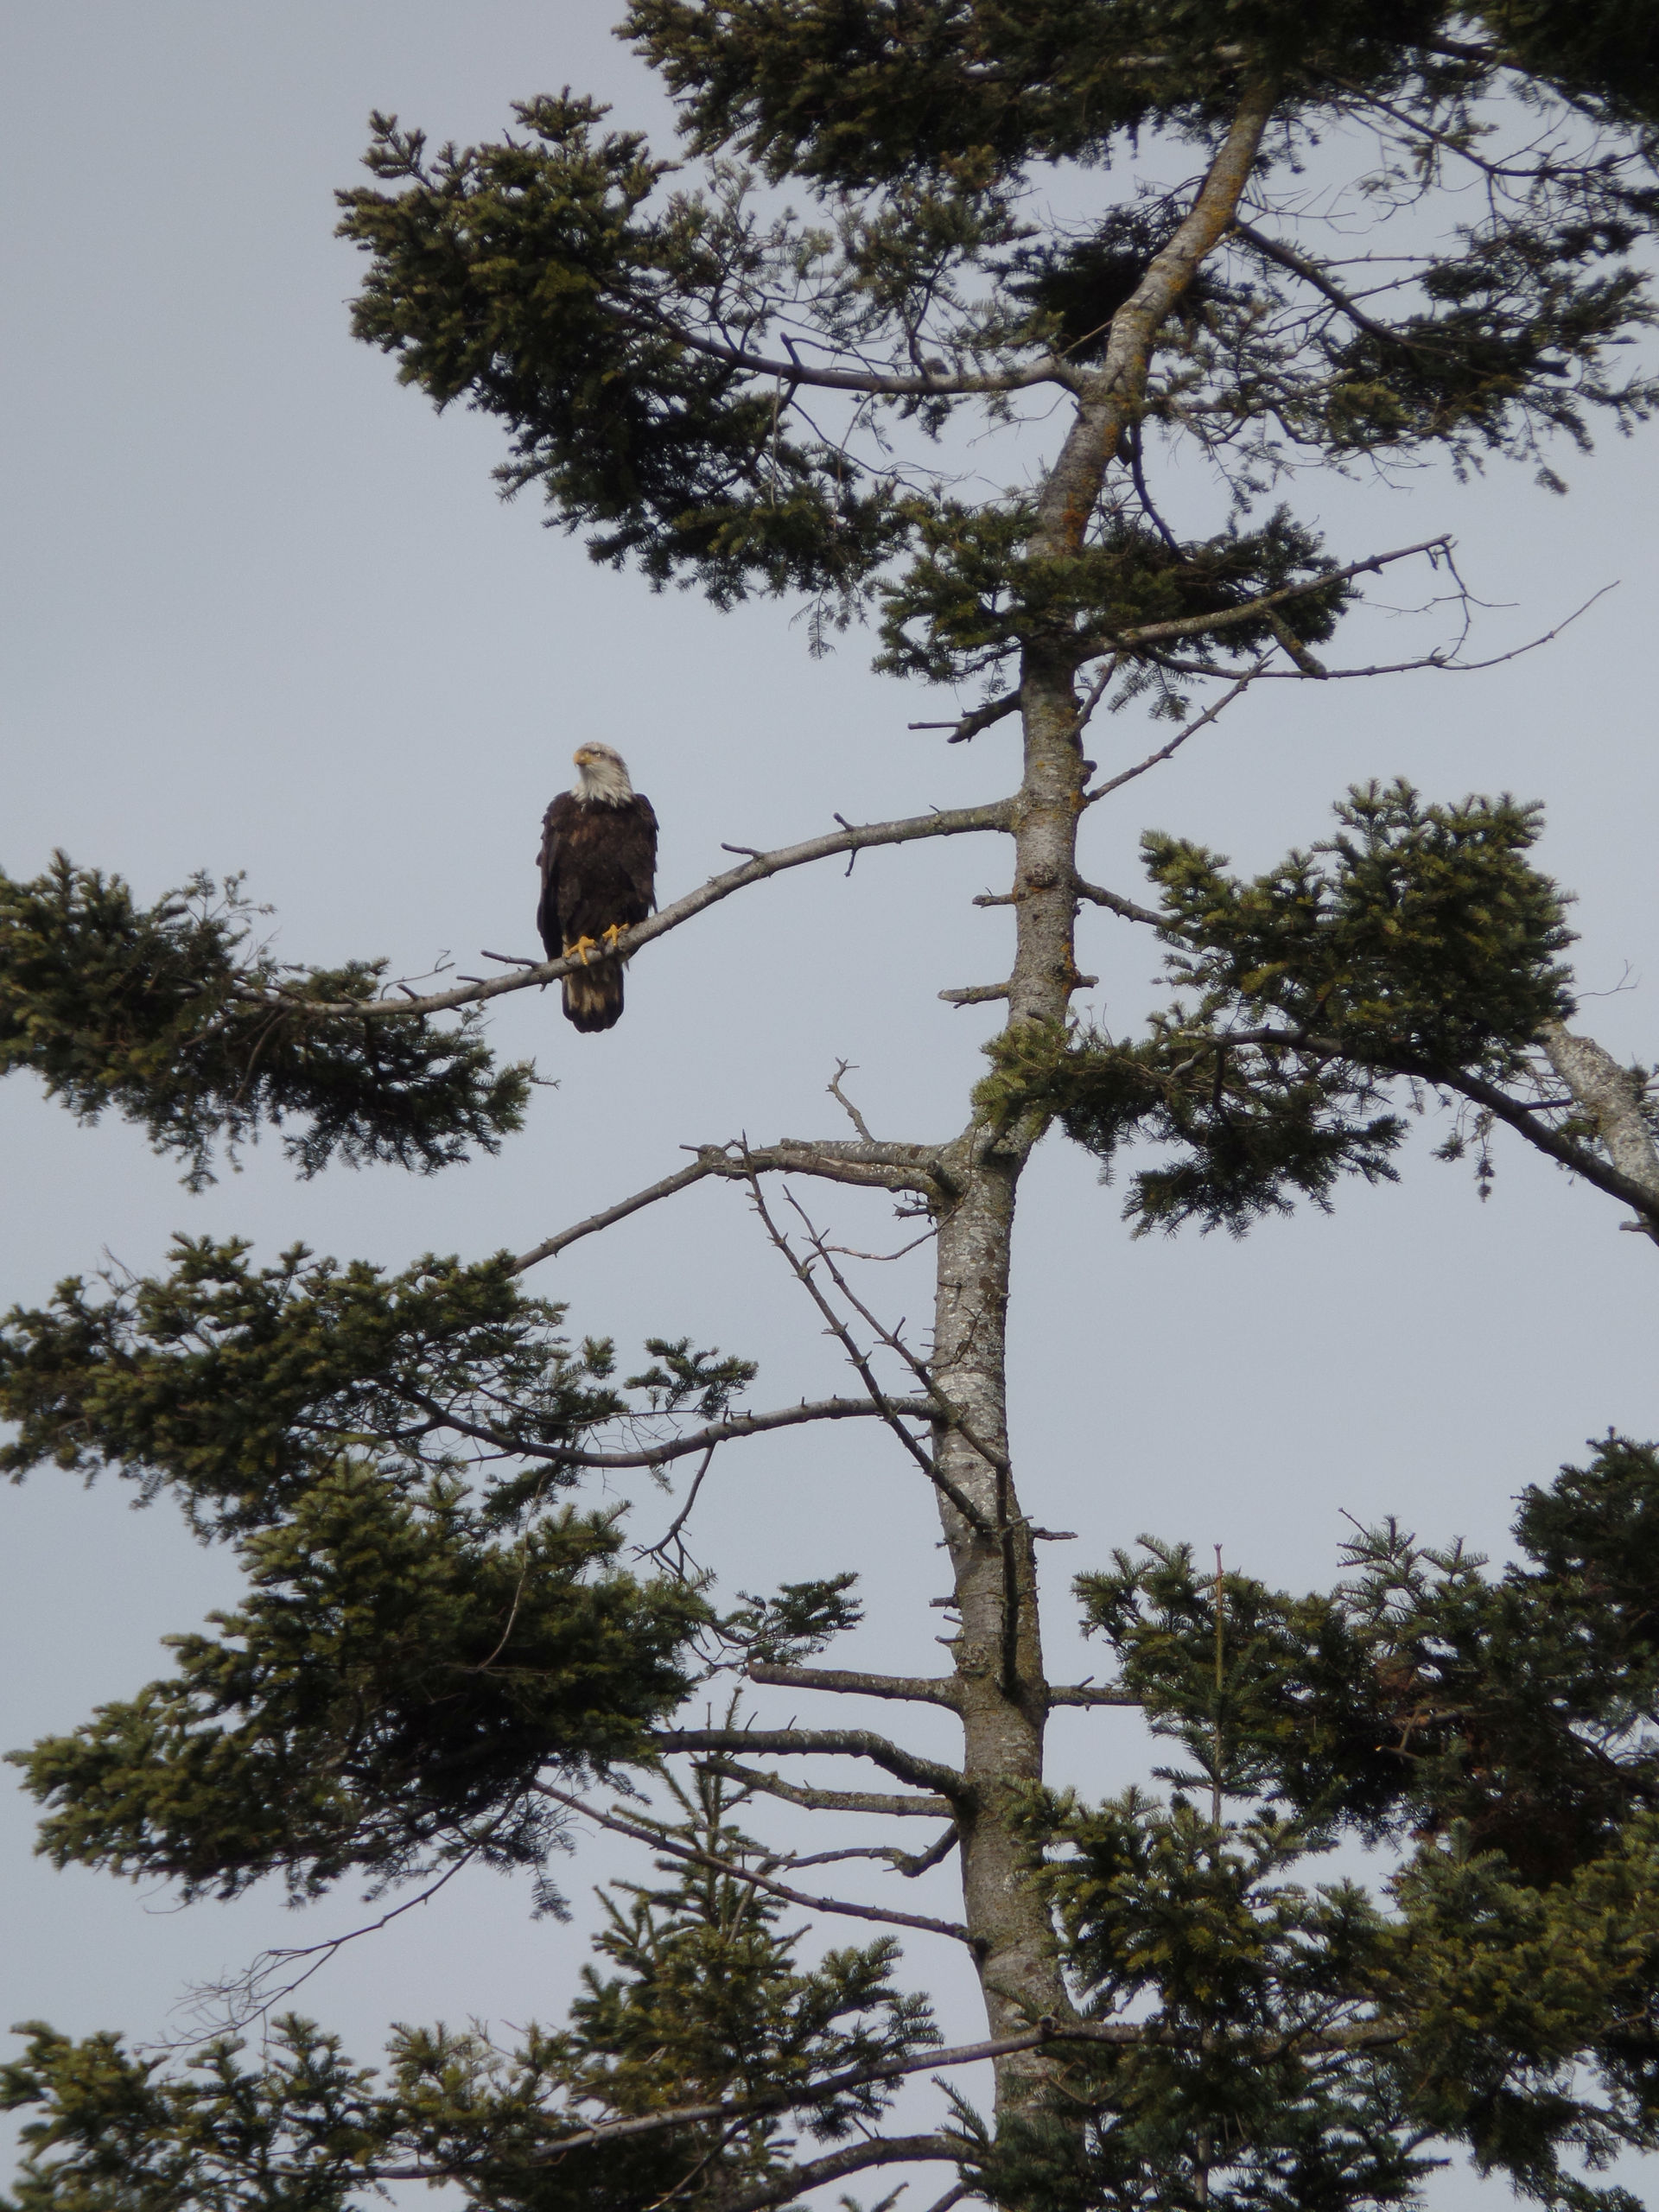 American Bald Eagle in tree